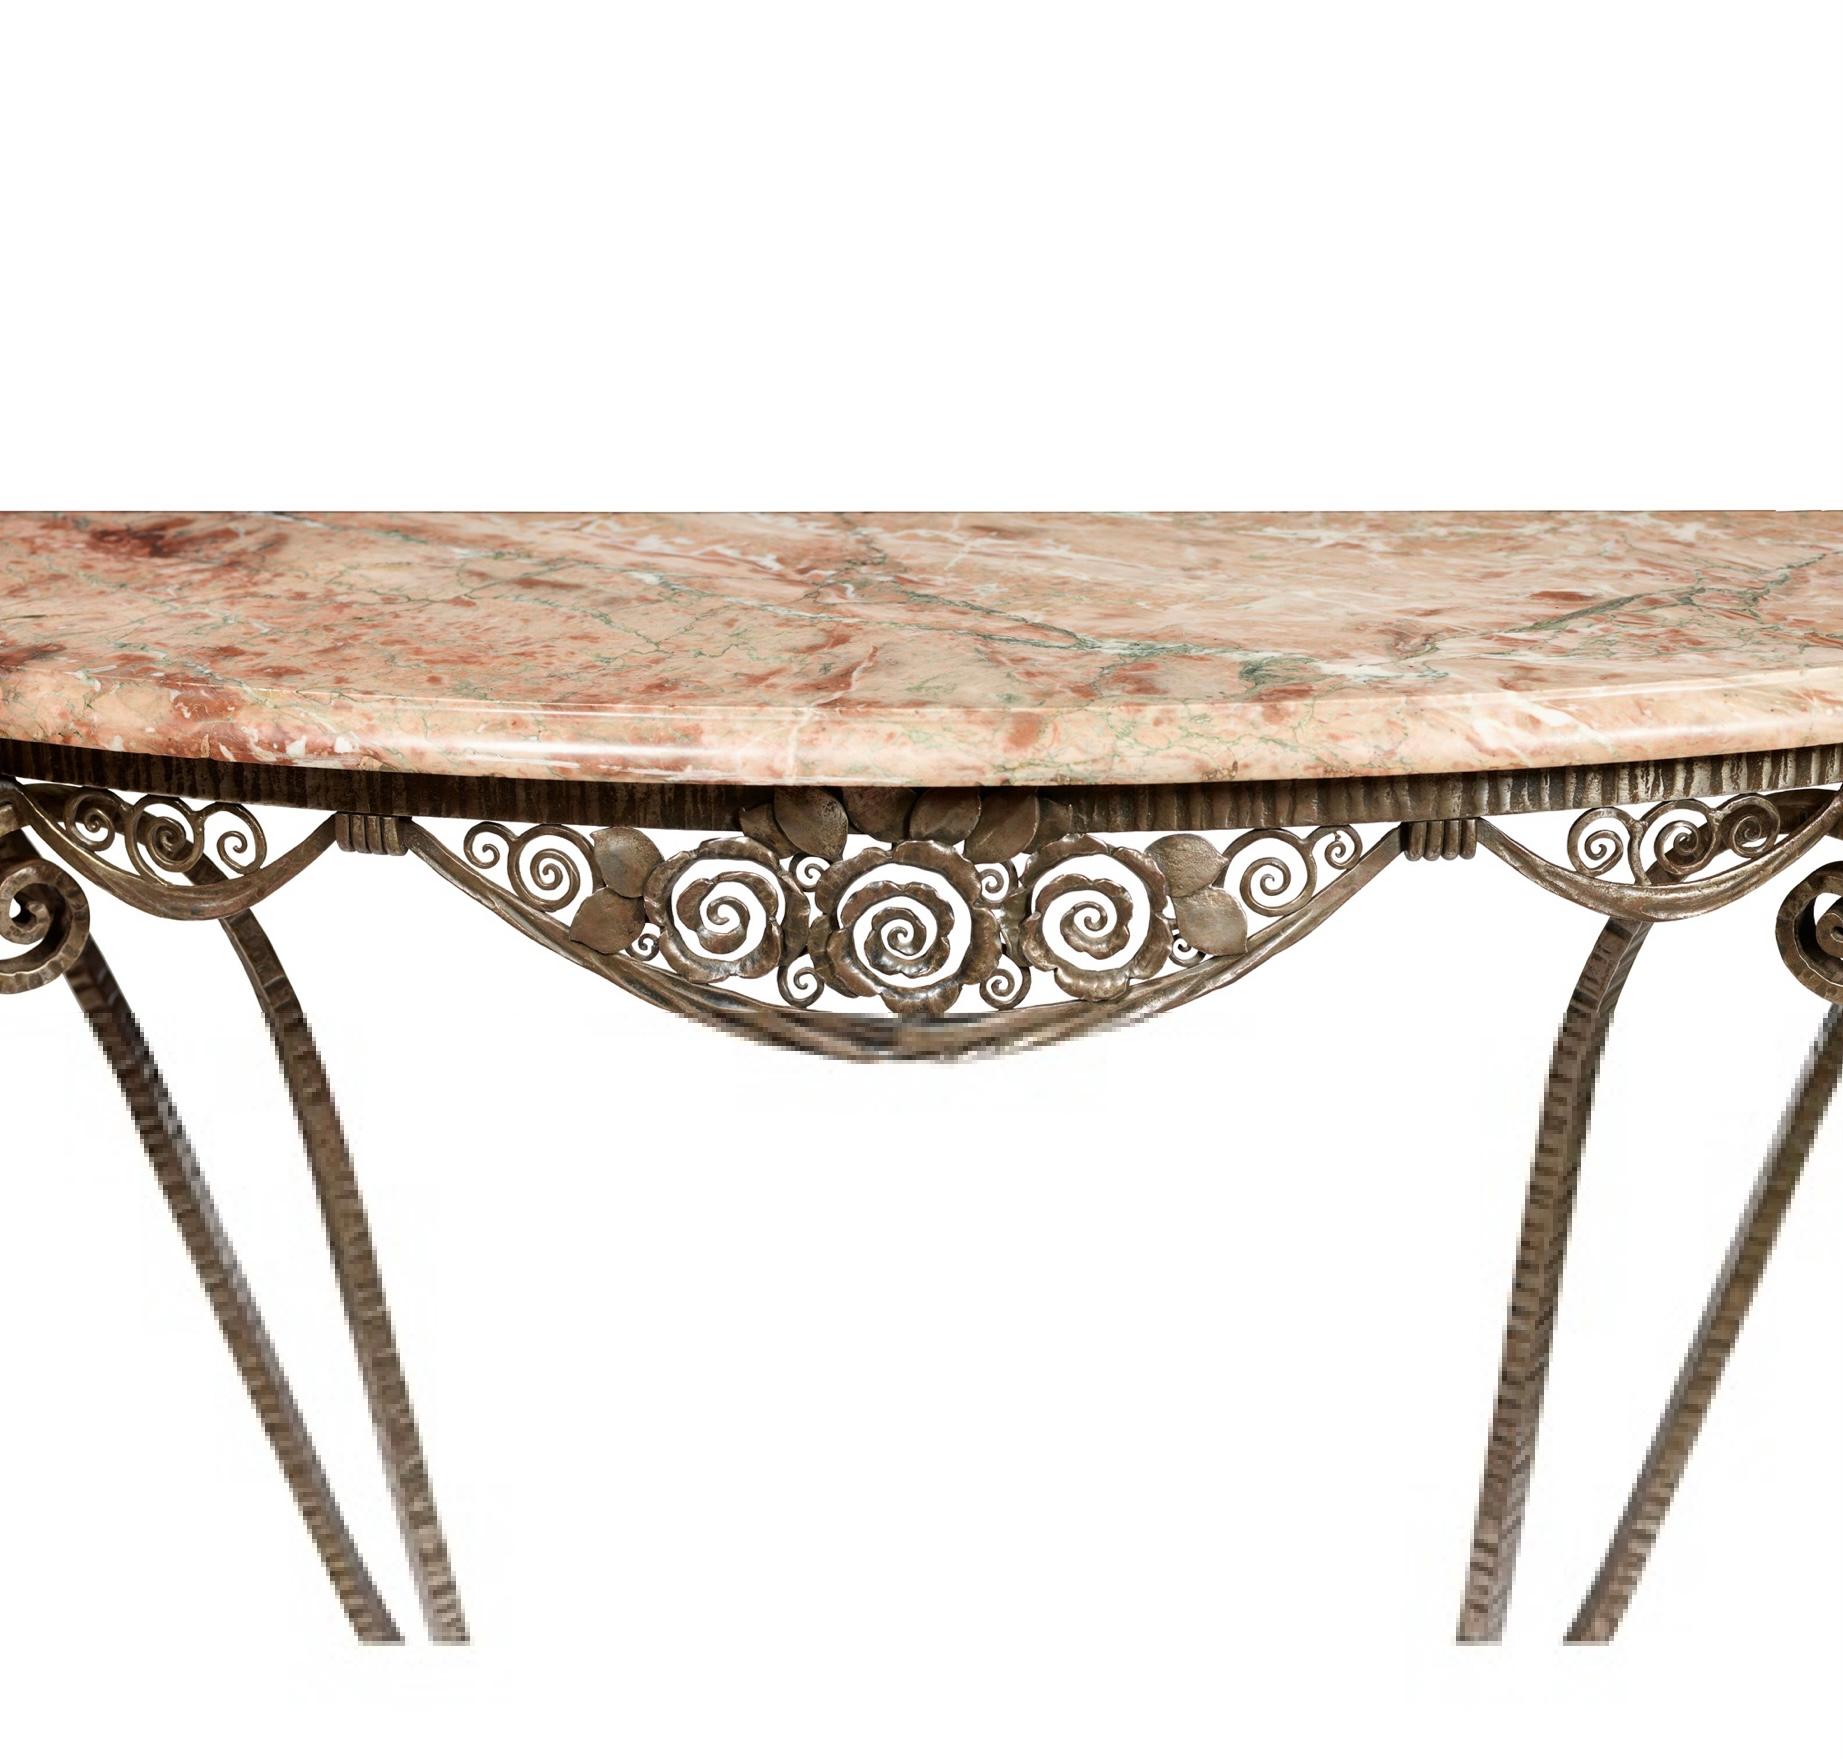 ''Simplicité'' console table by Edgar Brandt (1880-1960) 
circa 1925
wrought steel, marble top
Dimensions: 150.5cm wide, 87.5cm high, 45.5cm deep.